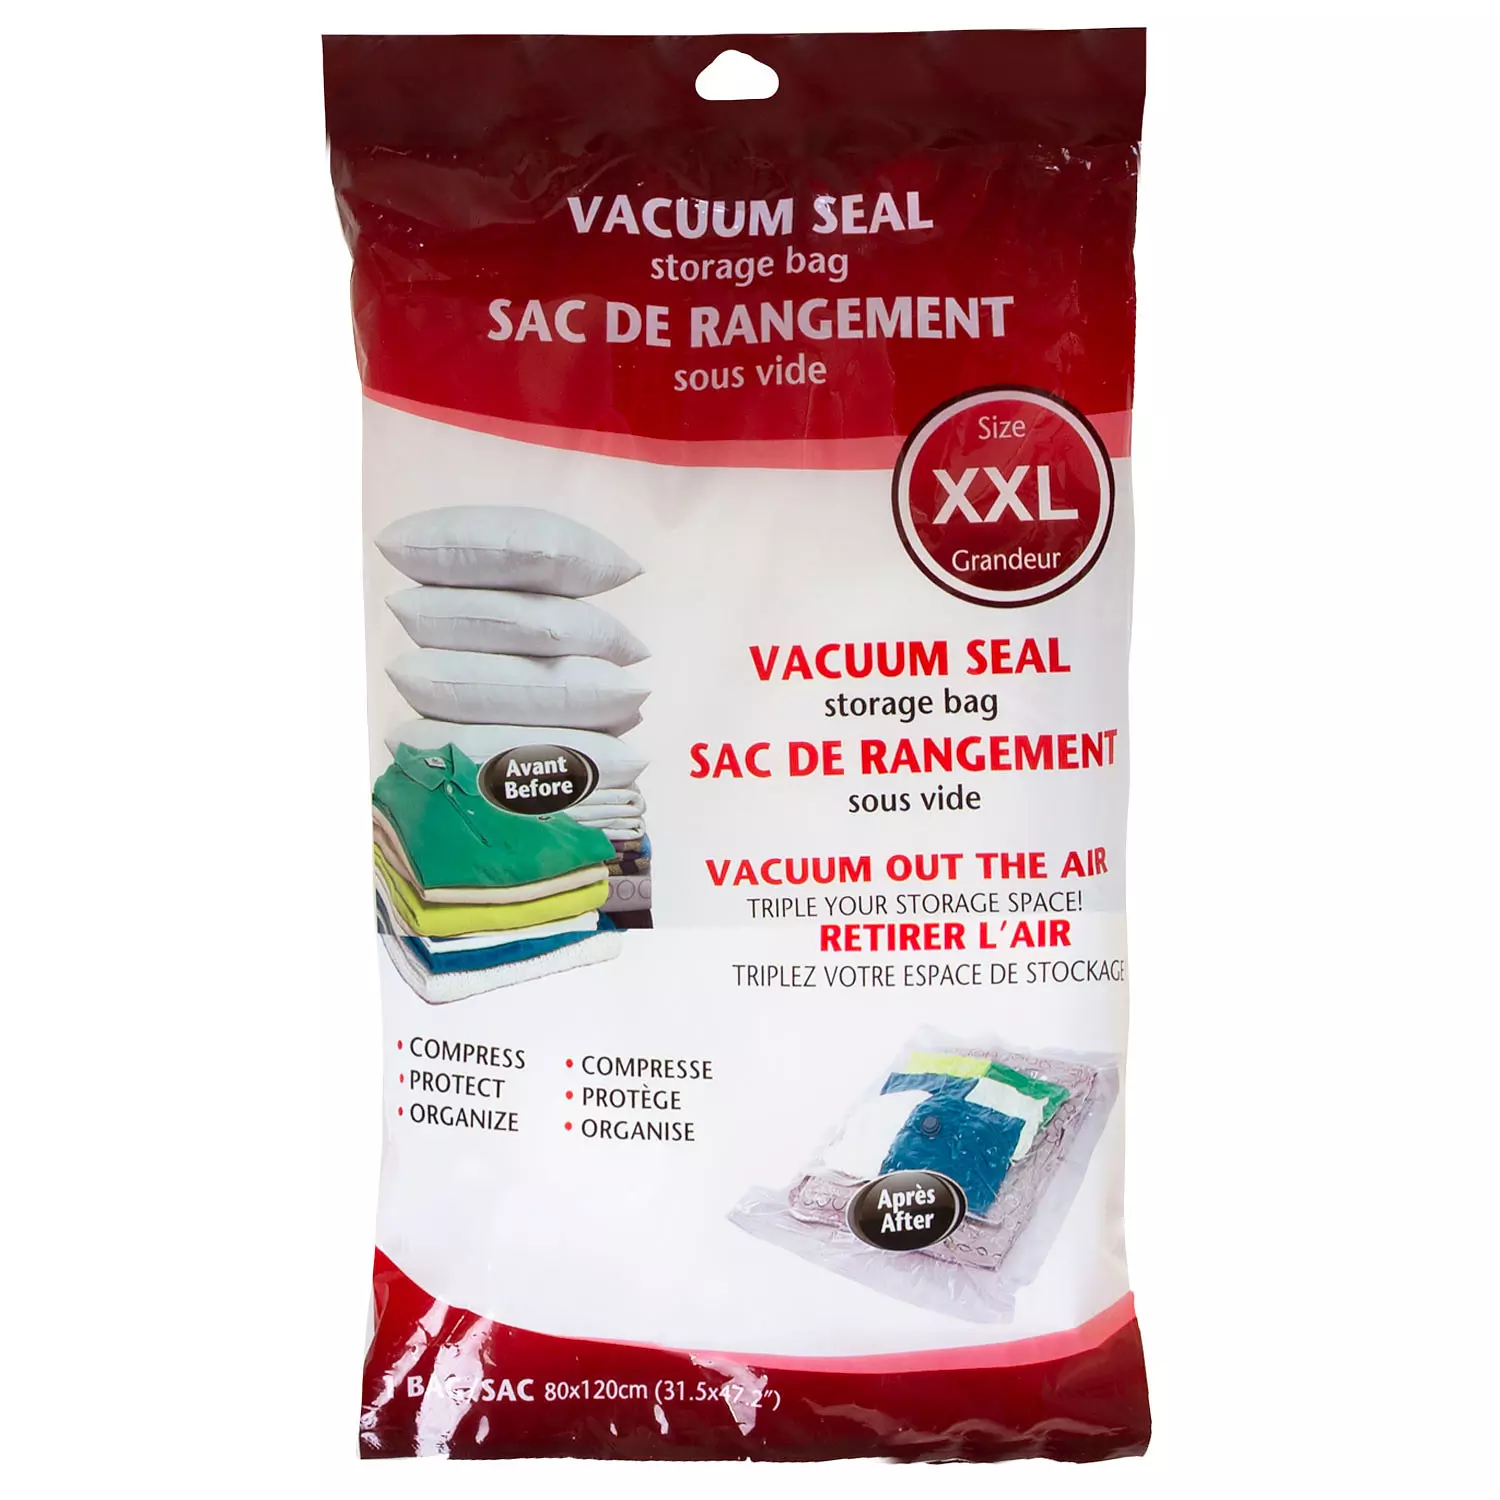 Vacuum seal storage bag, XXL